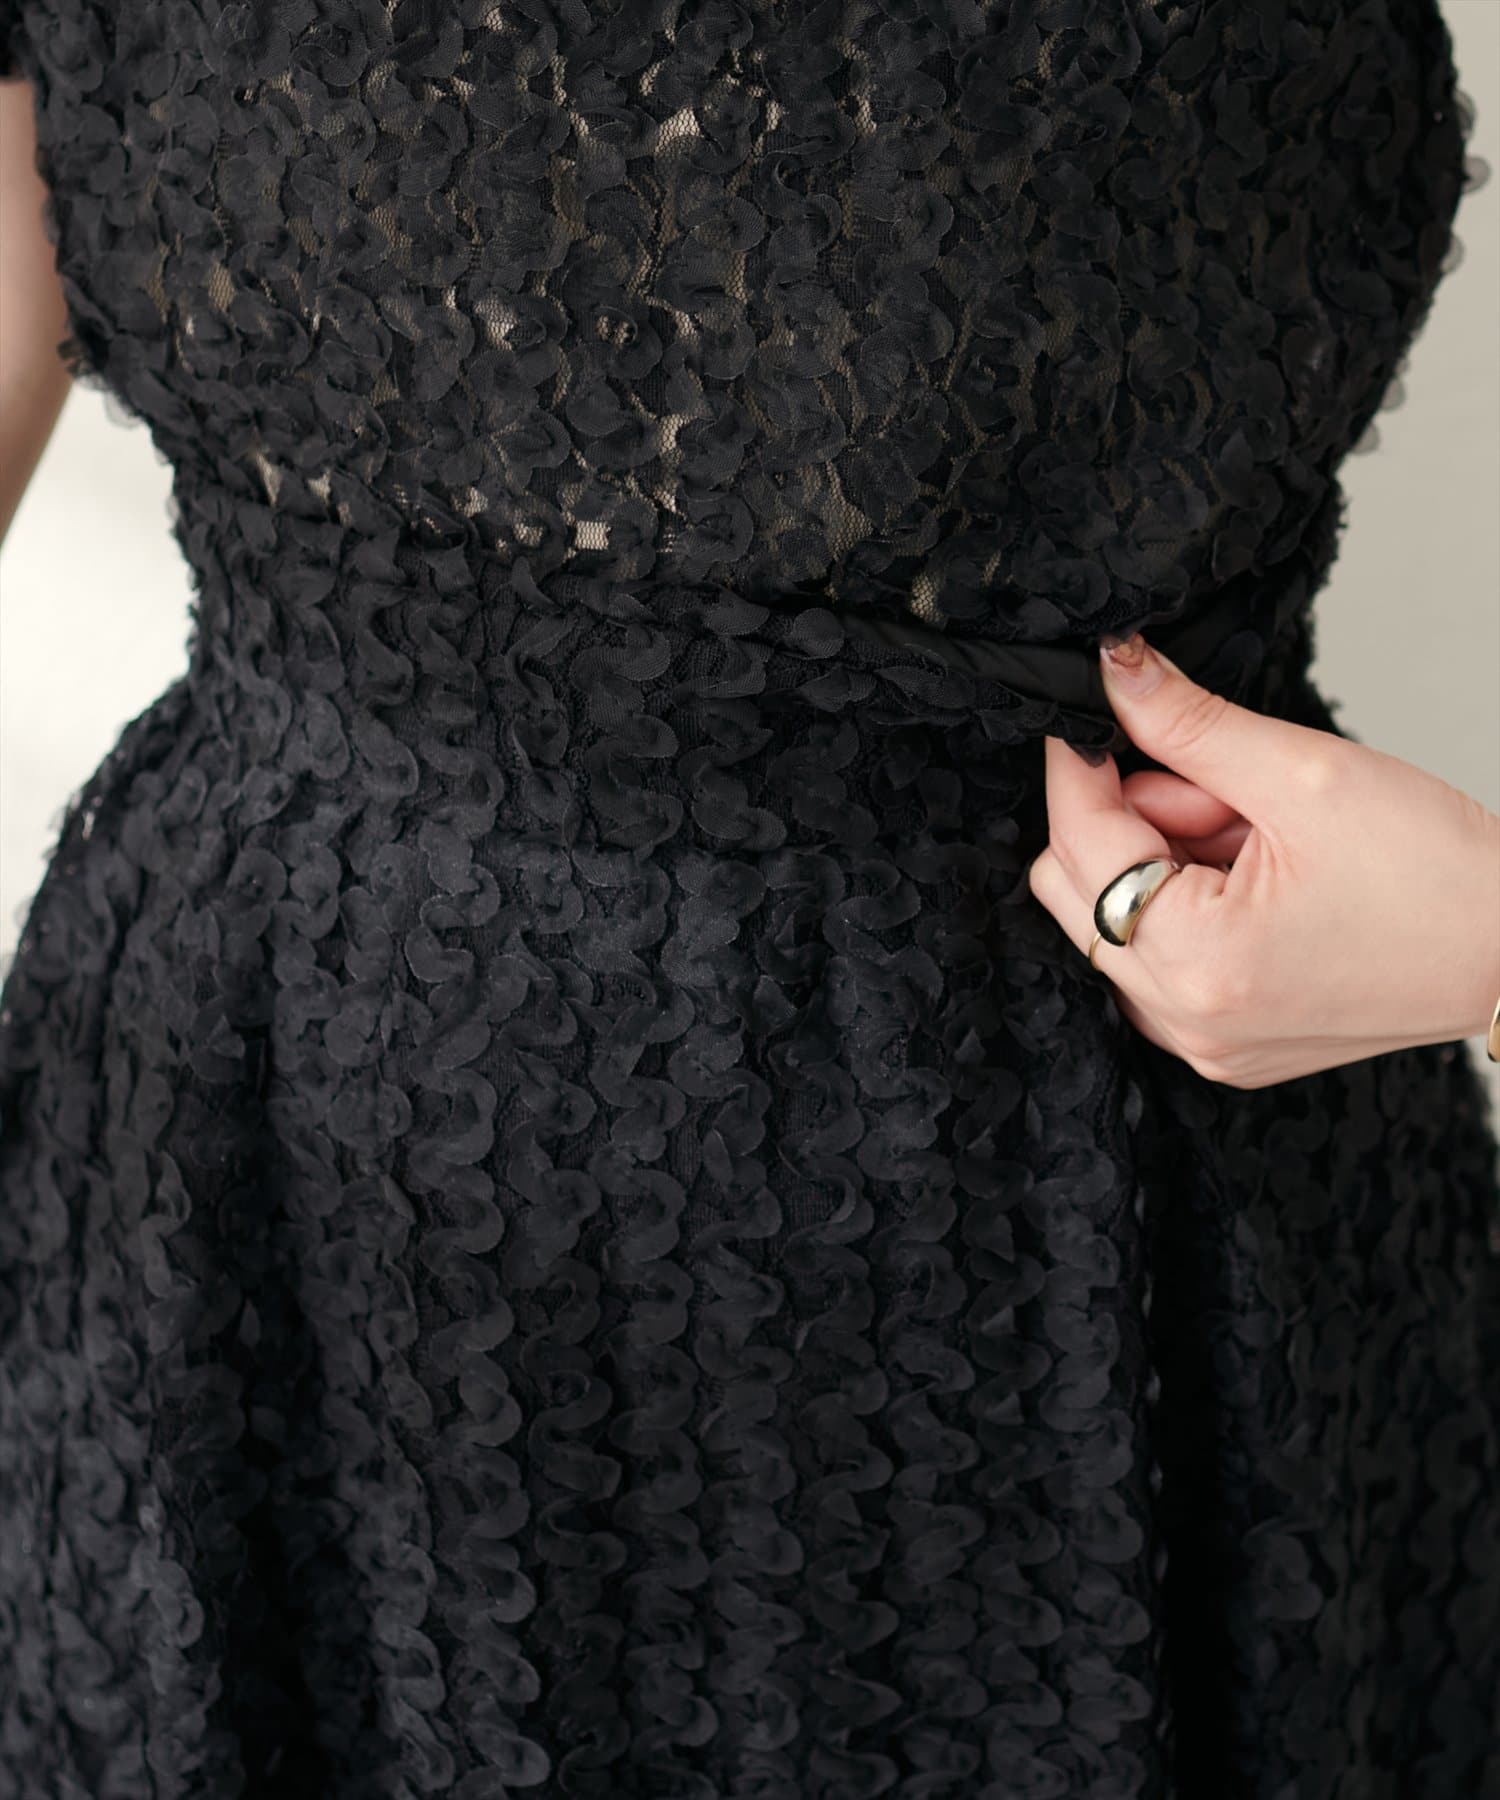 natural couture(ナチュラルクチュール) フラワーチュールレーススカート